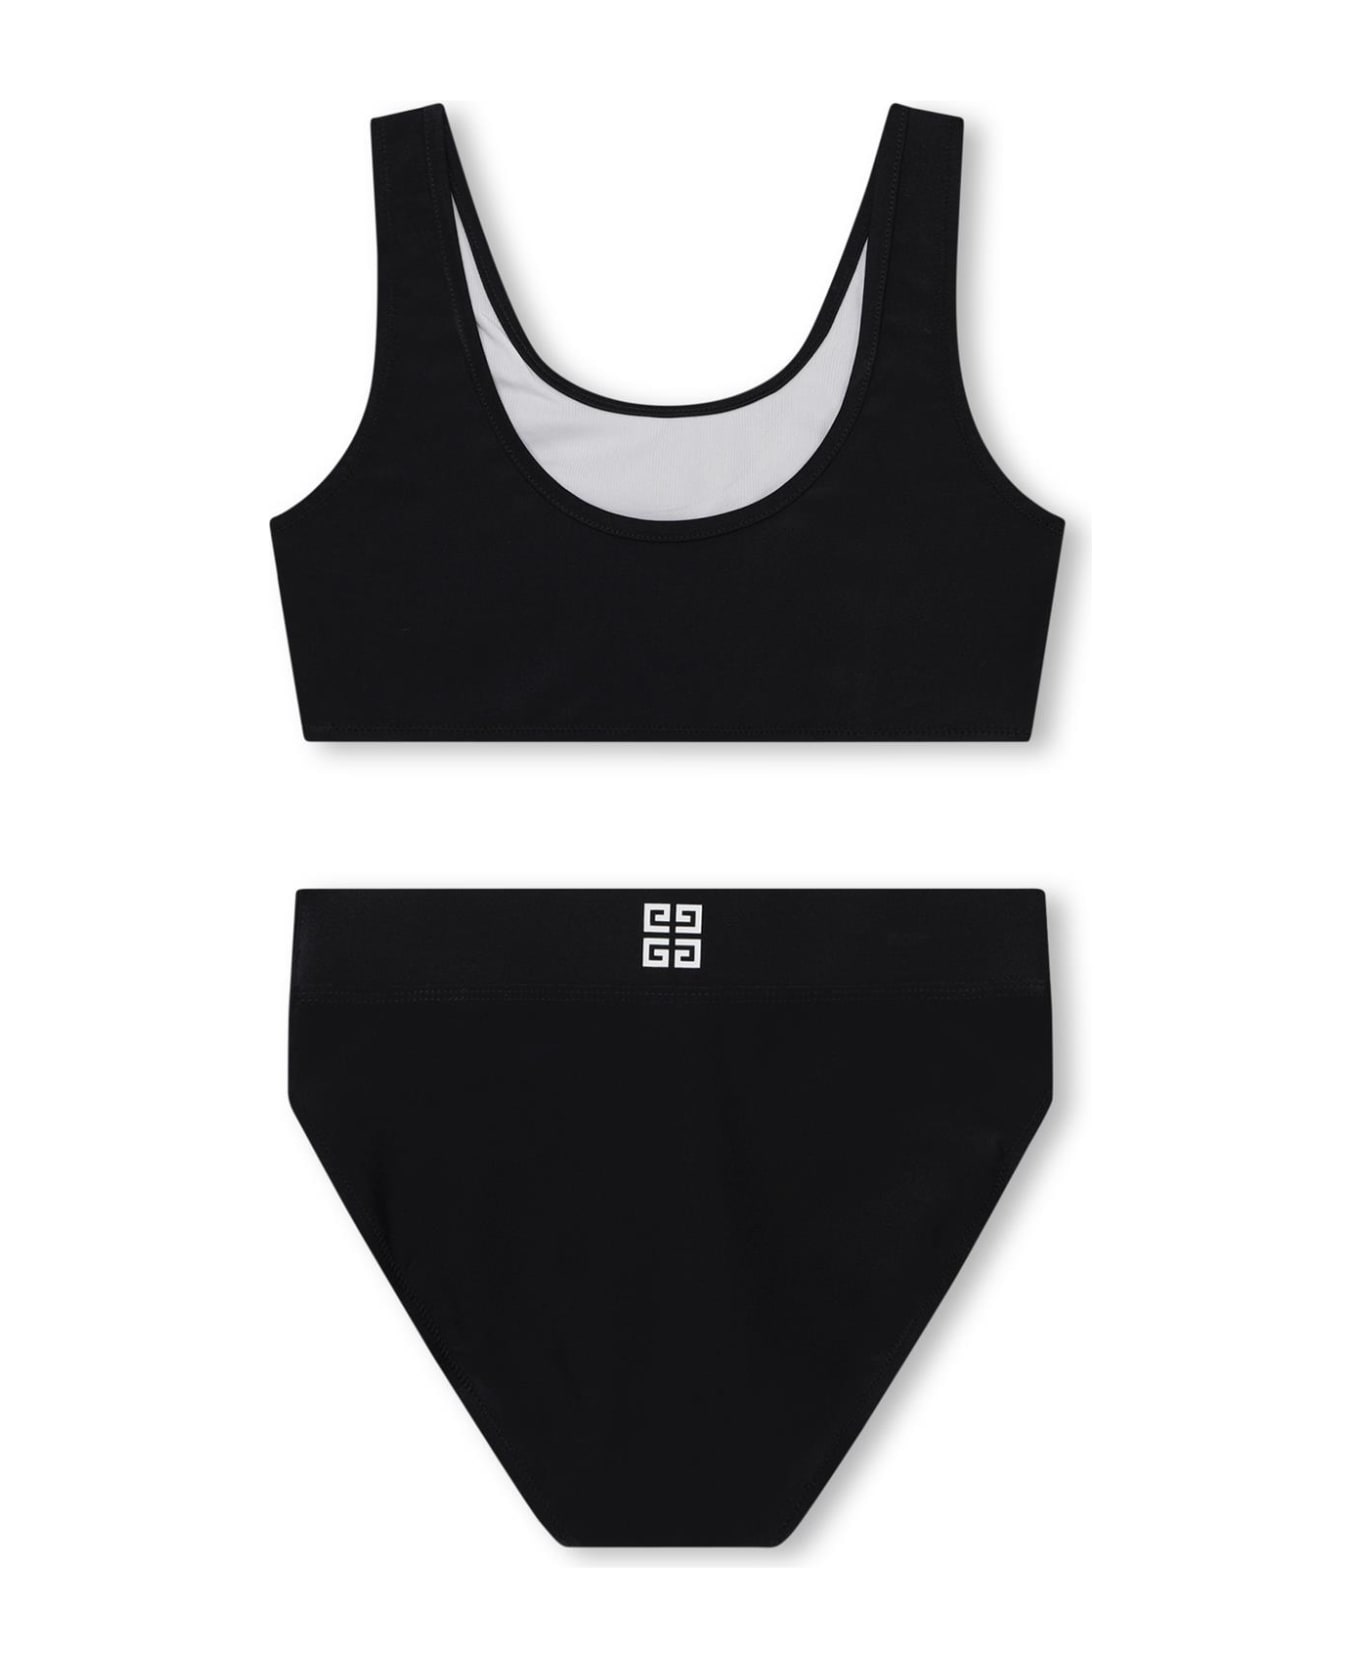 Givenchy Bikini Bottom With Logo - Black 水着